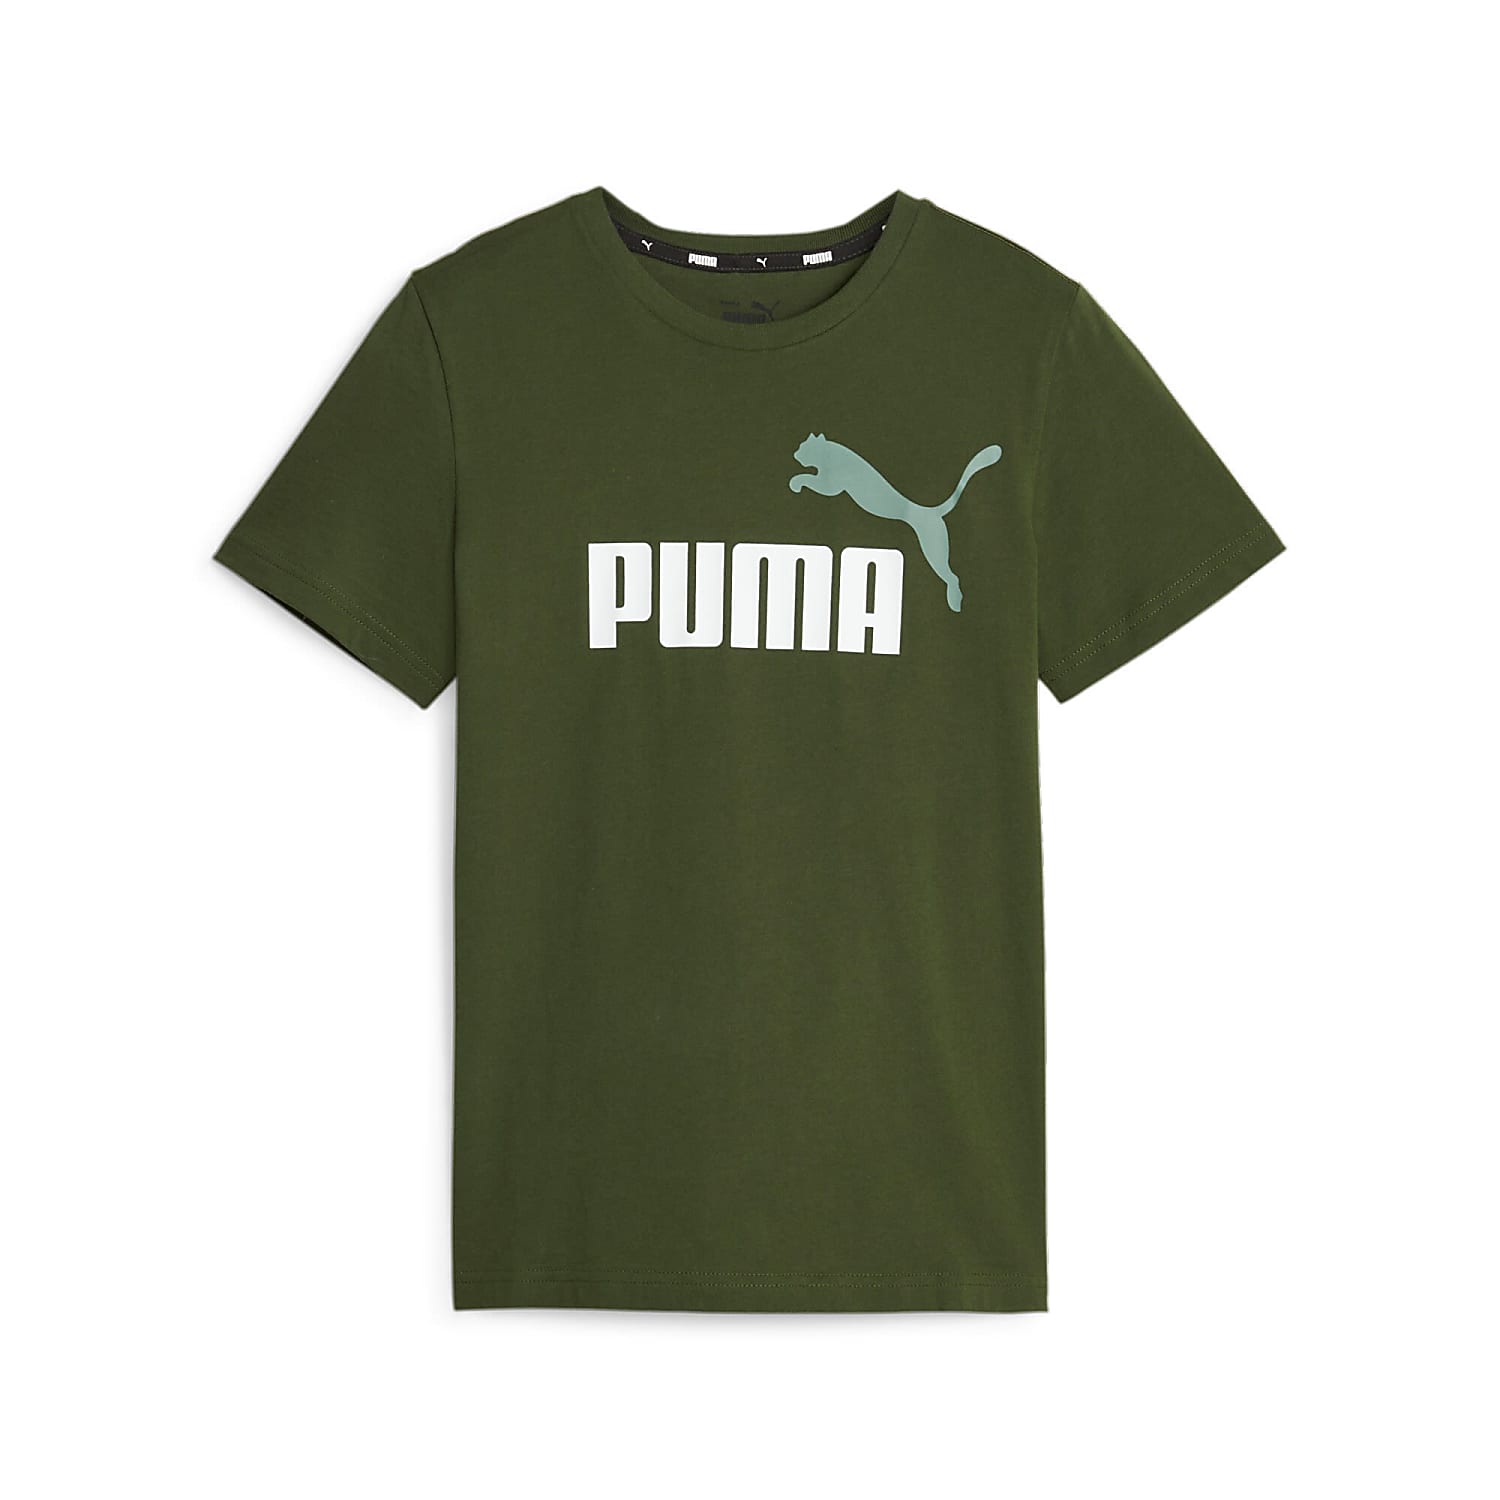 Buy Puma BOYS ESS+ 2 COL LOGO TEE, Myrtle online now